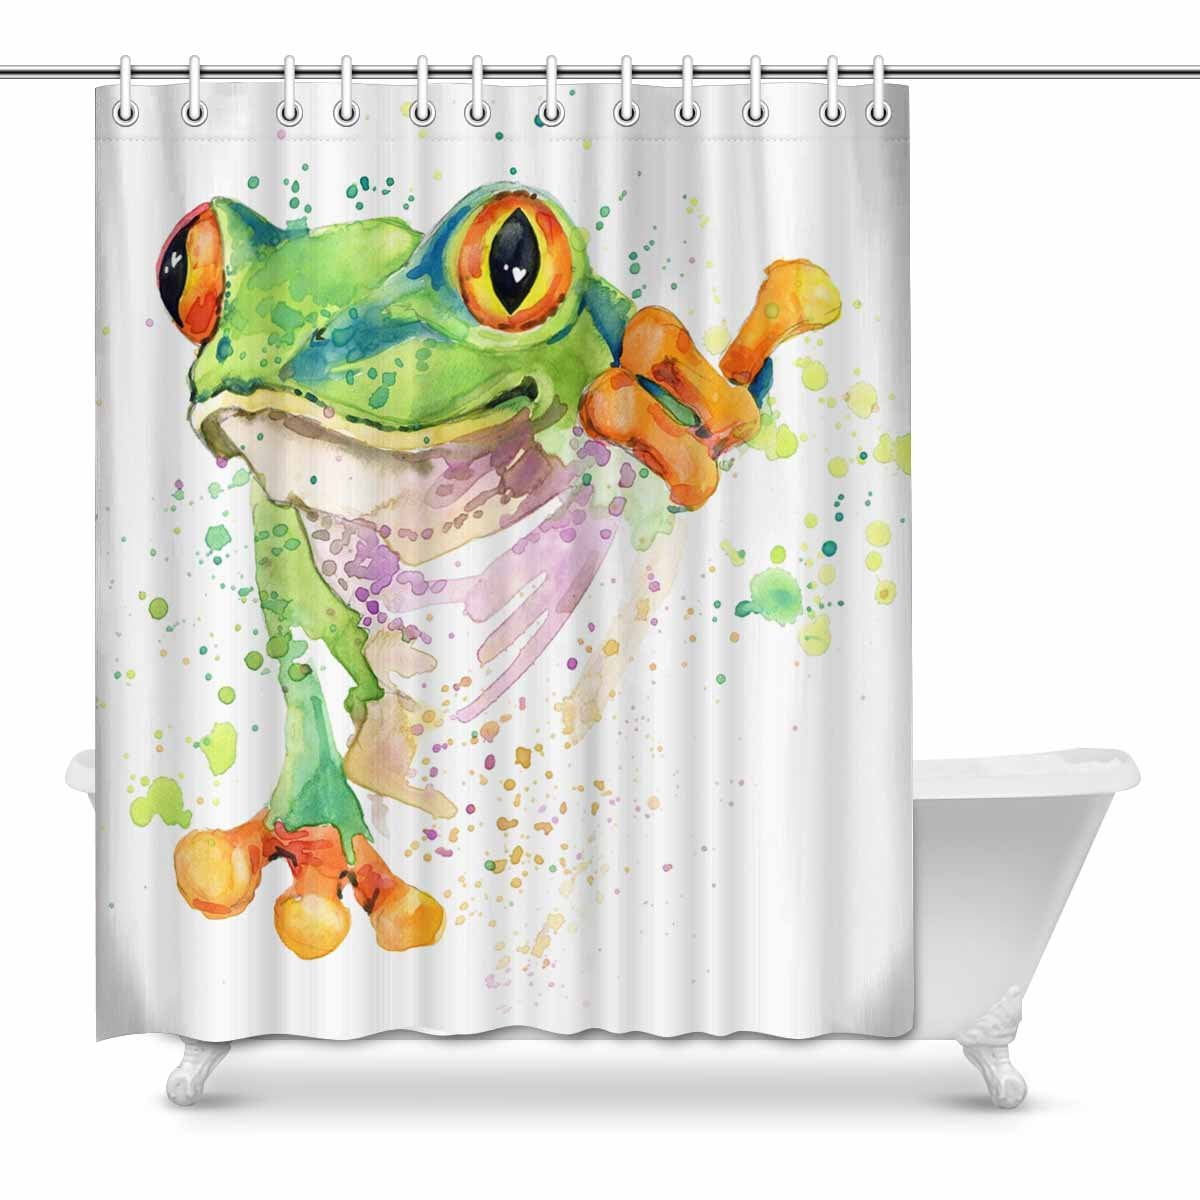 Frog Shower Curtain Prince Kids Fairytale Print for Bathroom 